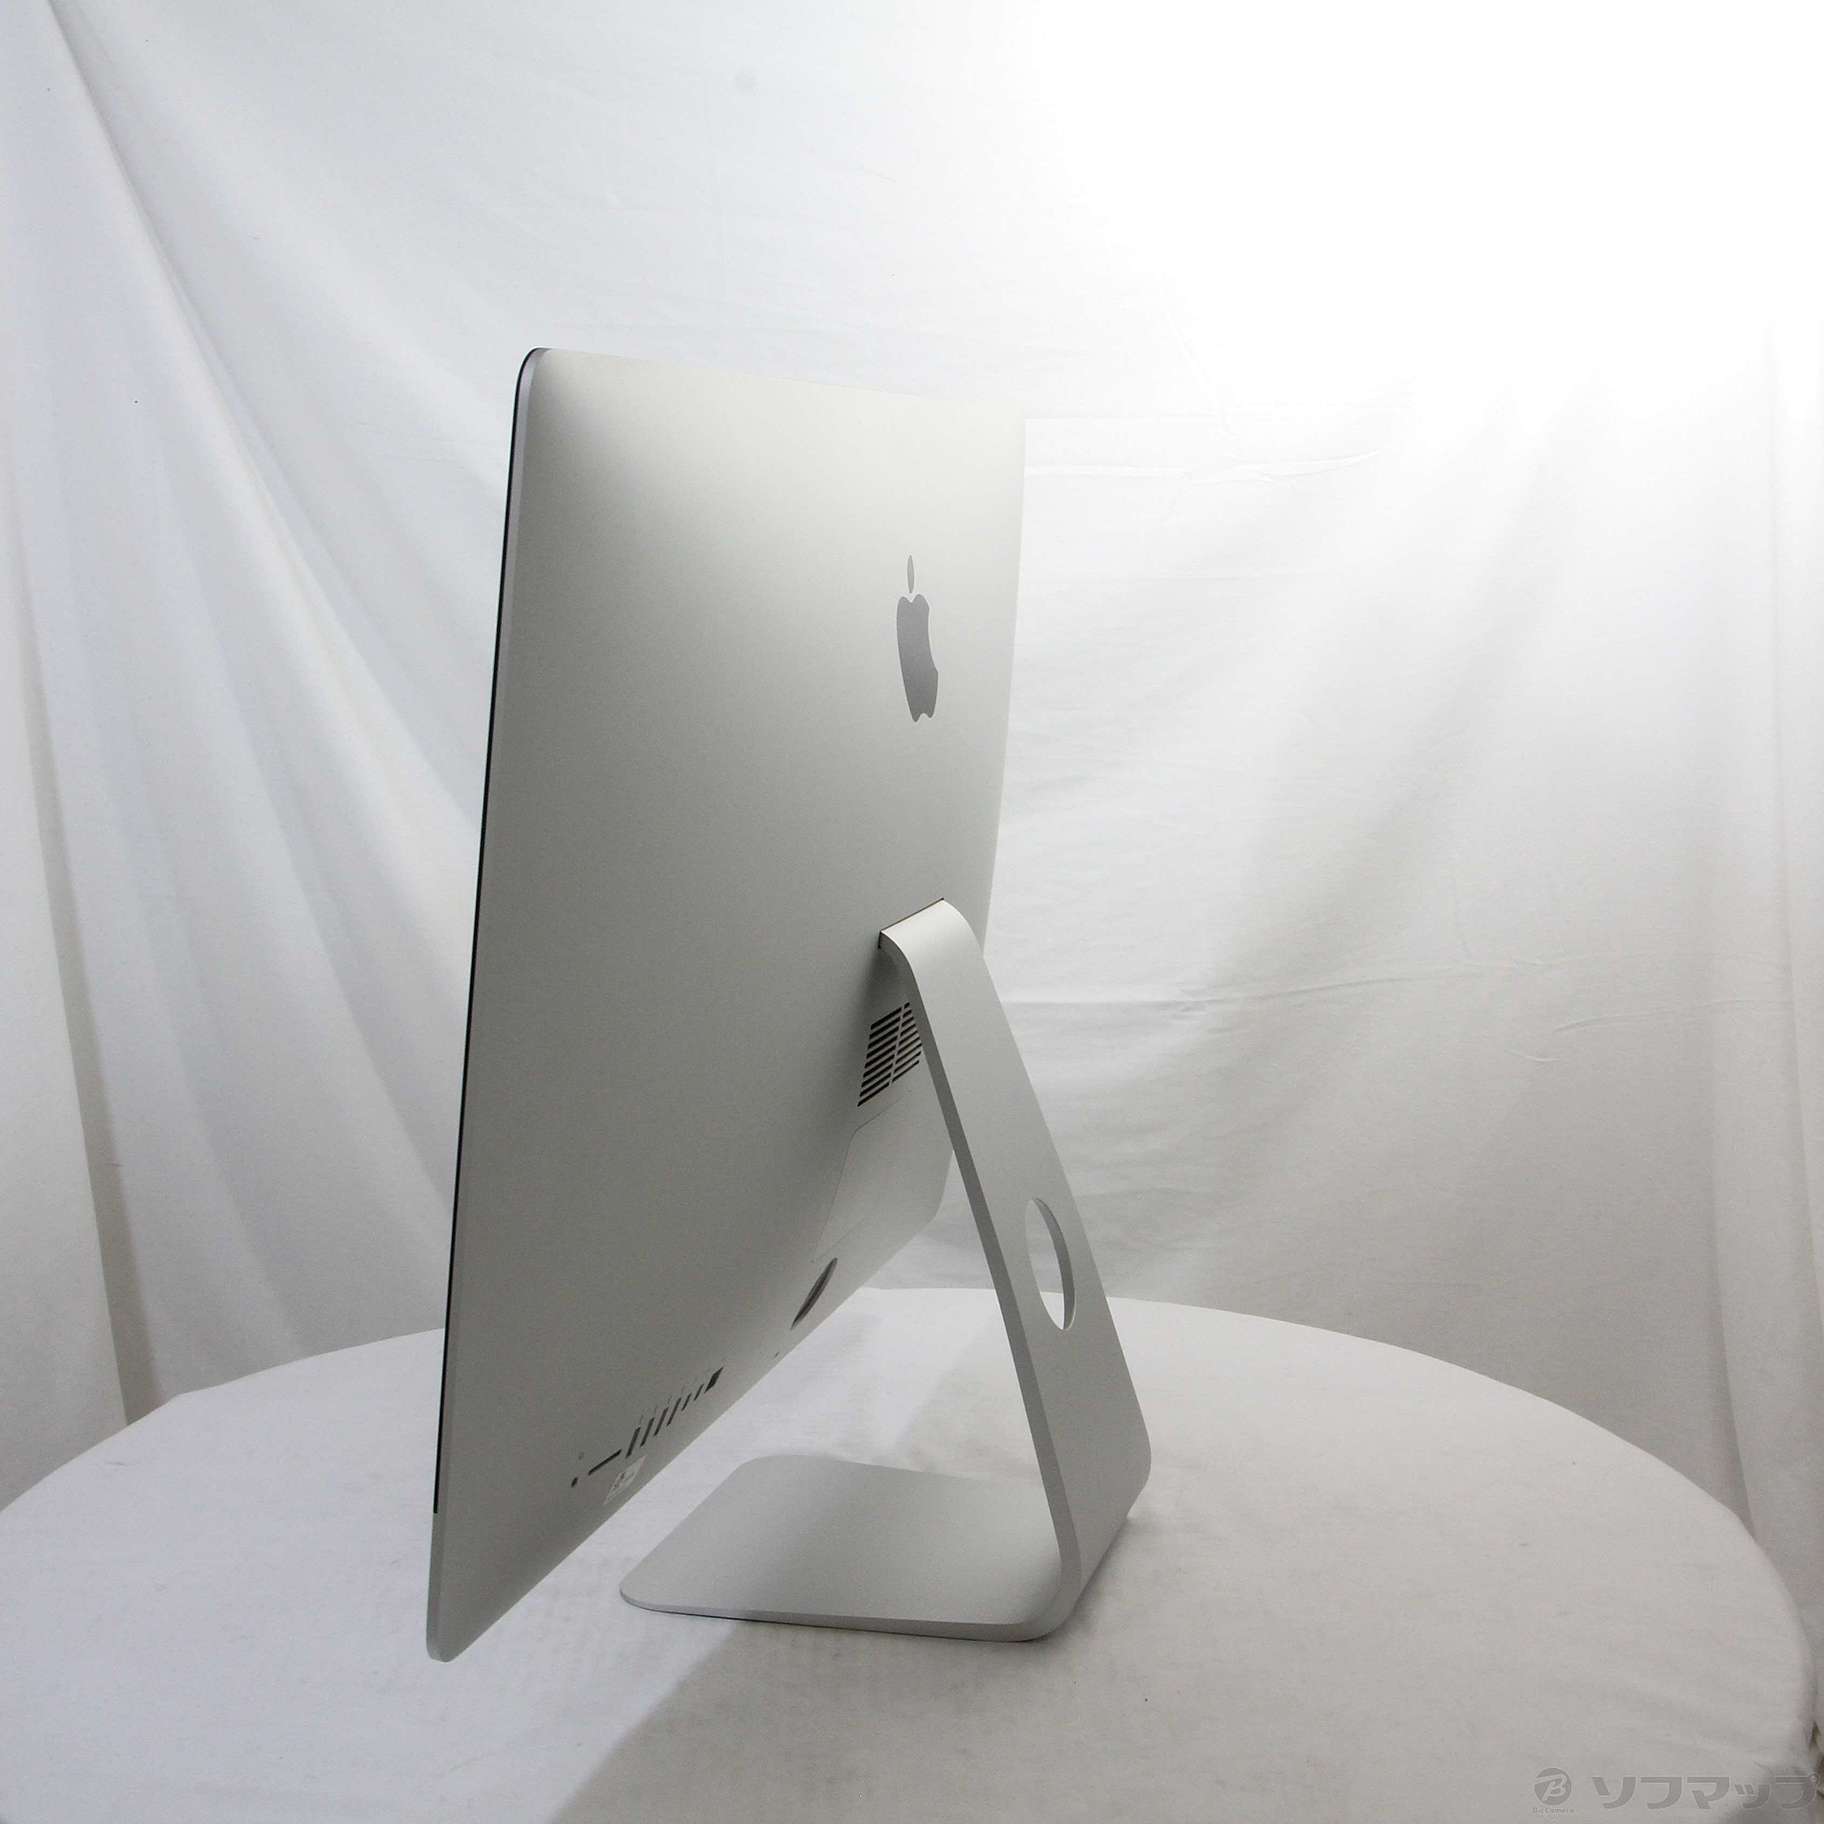 中古品〕 iMac 27-inch Late 2012 MD095J／A Core_i5 2.9GHz 16GB